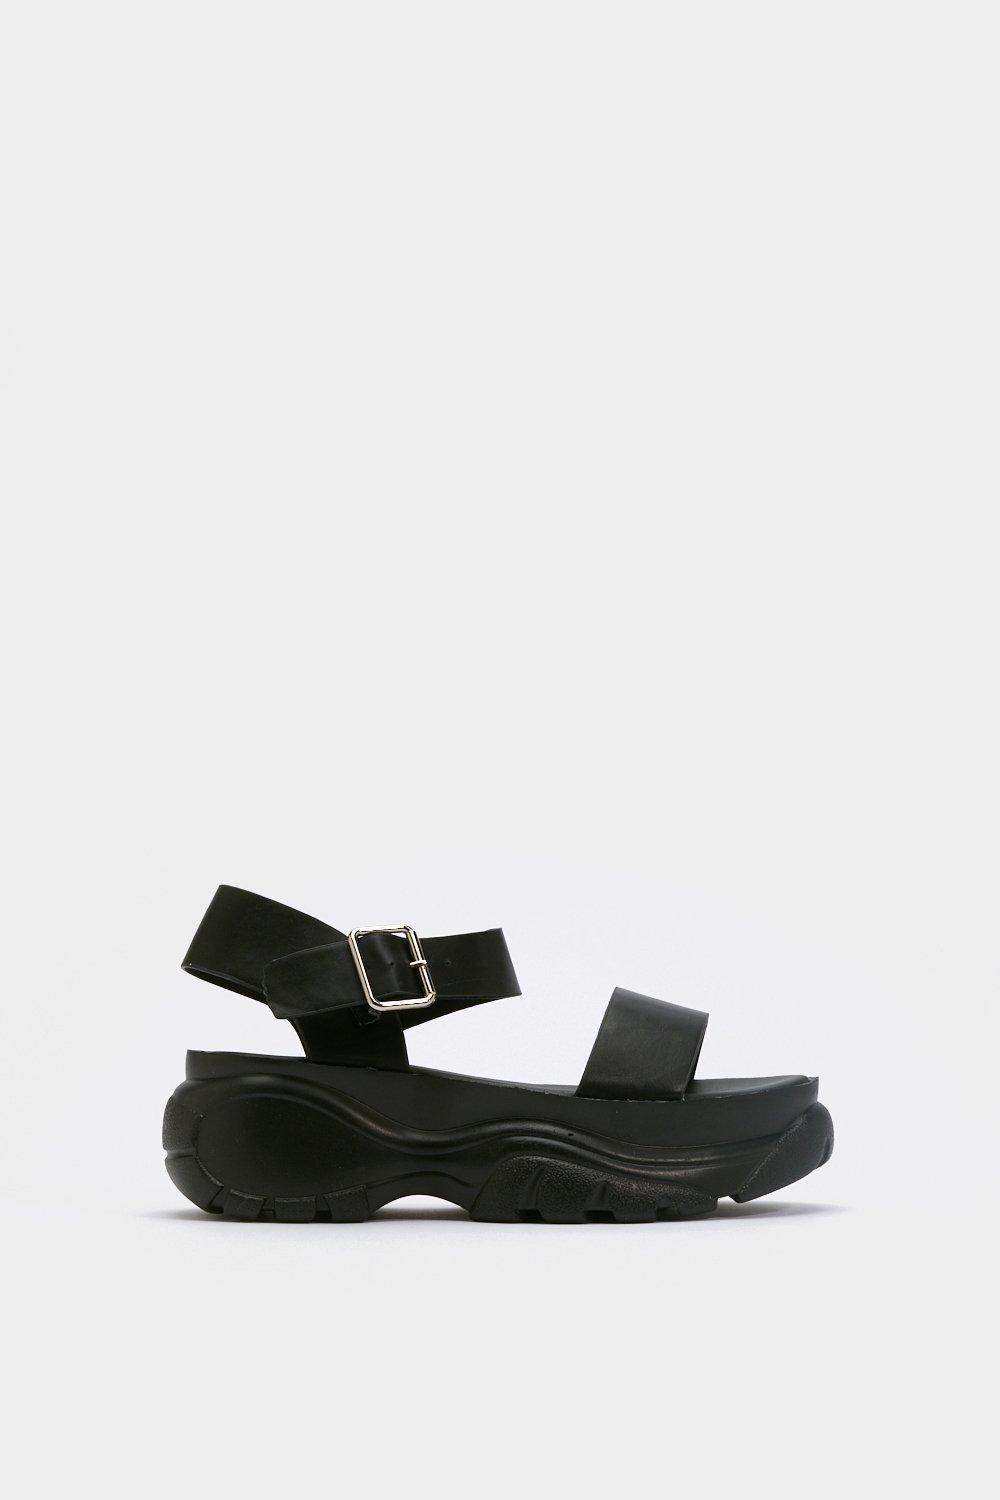 platform sandals chunky